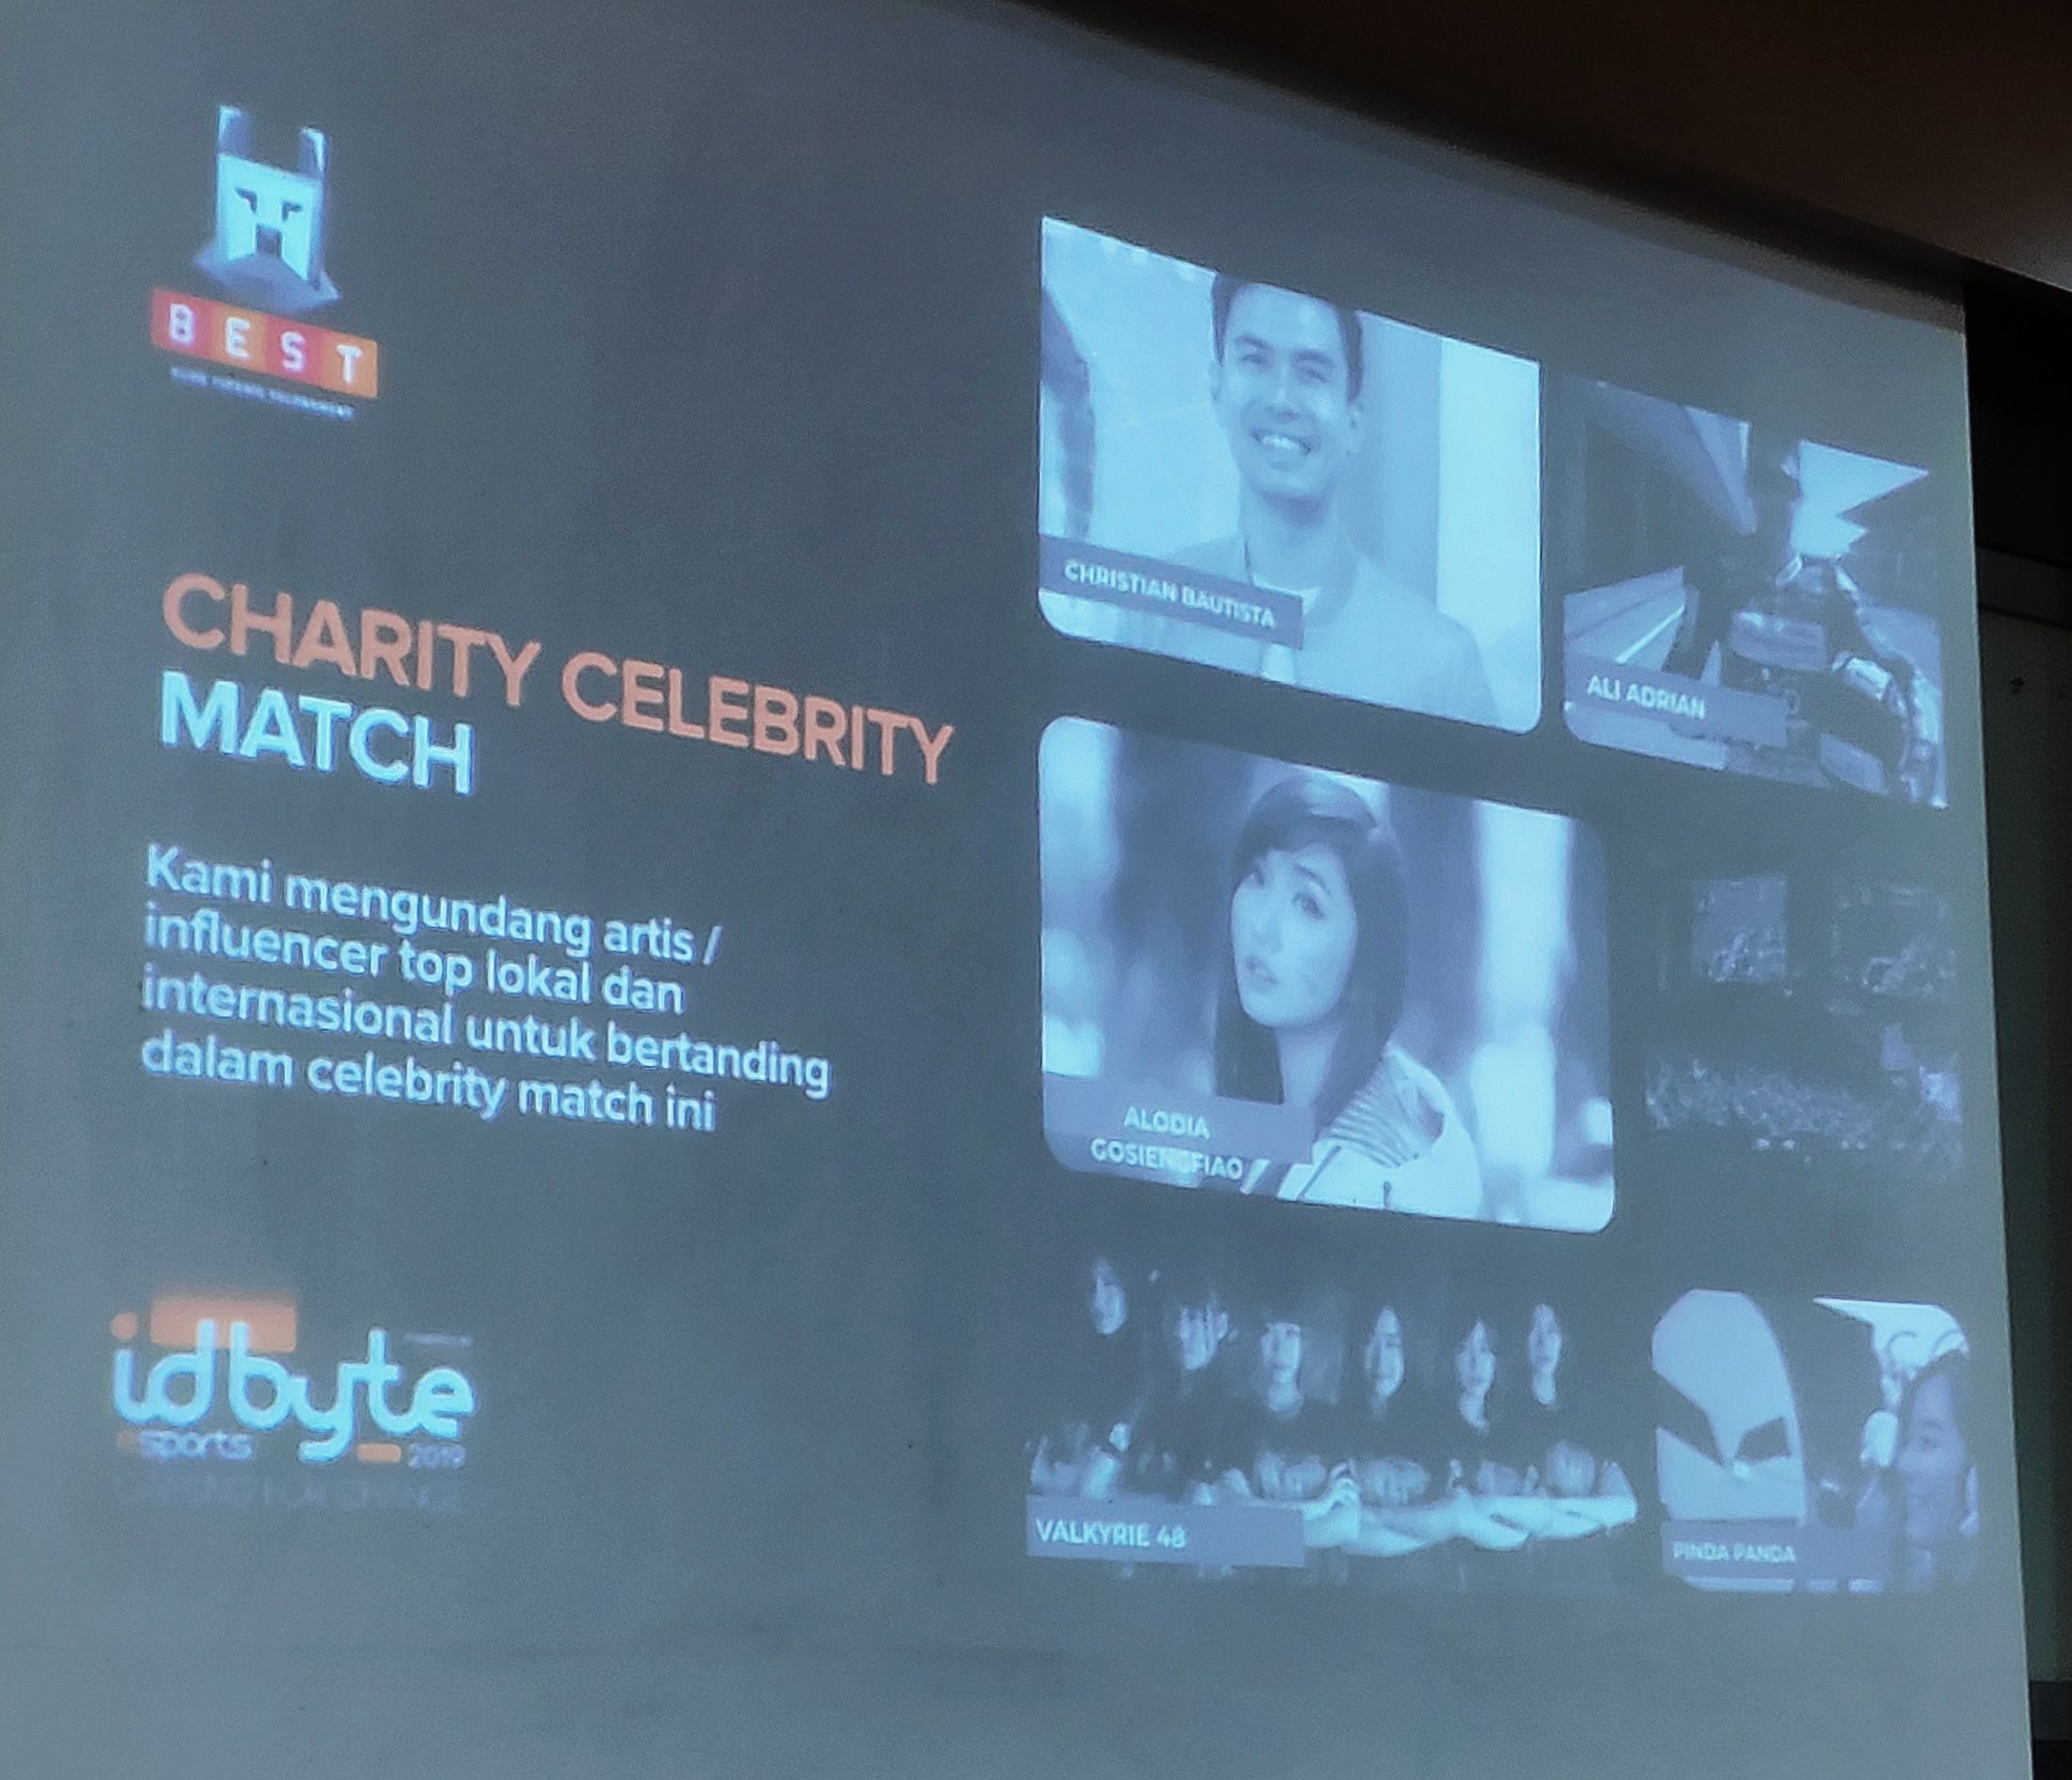 Charity Celebrity Match, salah satu rangkaian acara di IDBYTE ESPORTS 2019